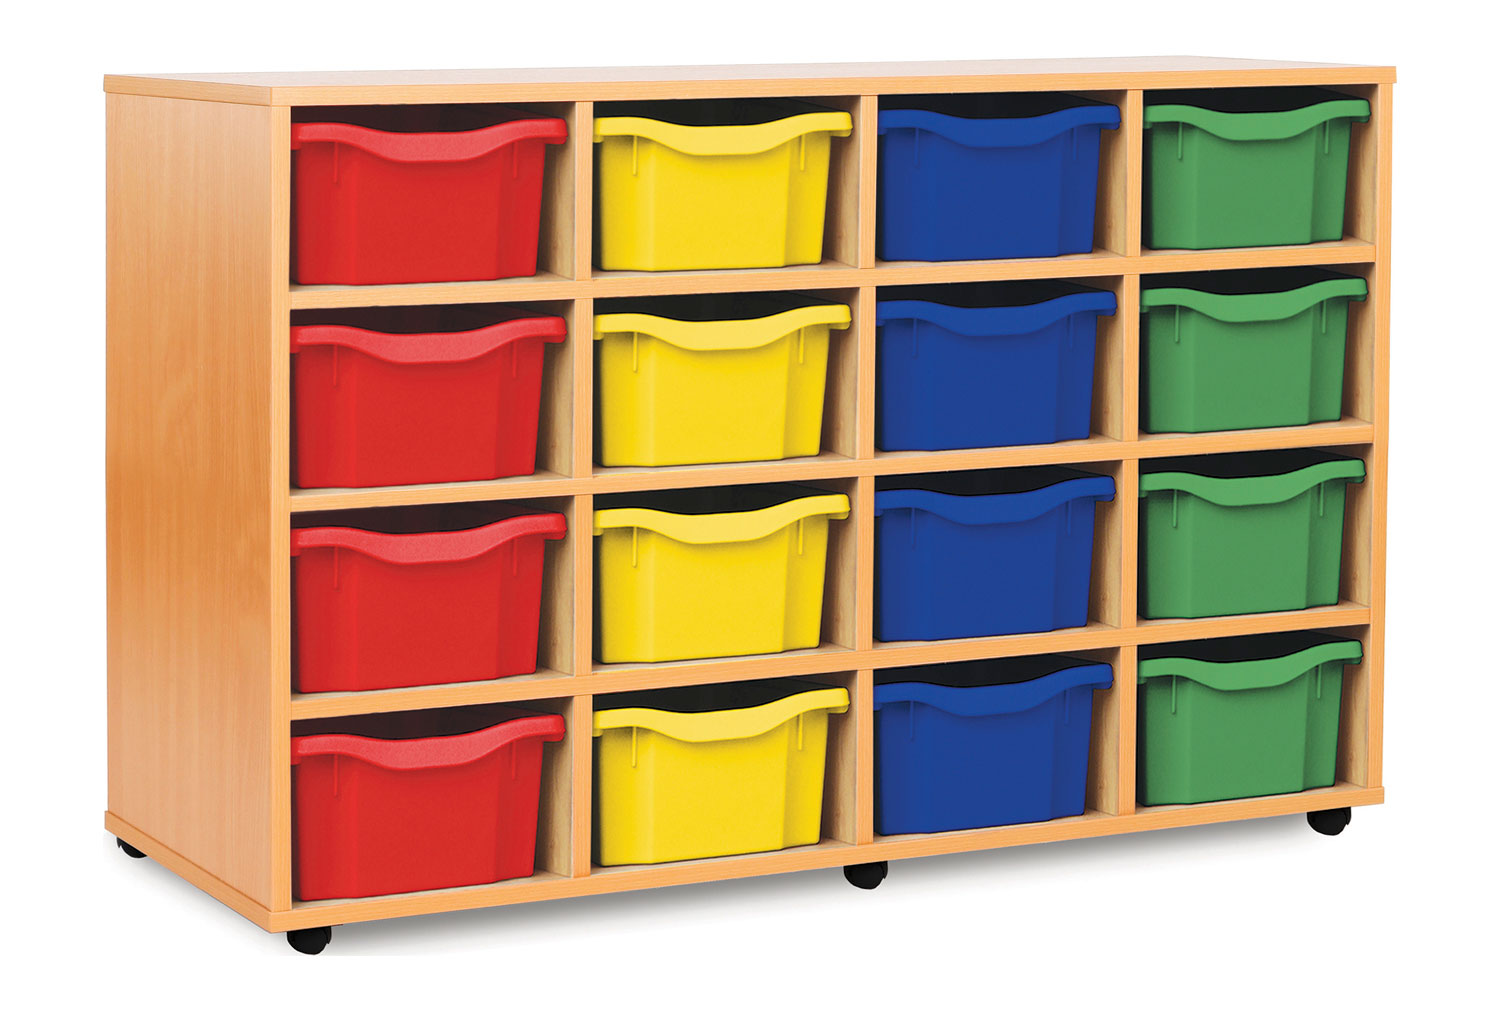 16 Deep Classroom Tray Storage Unit, Red/Blue/Green/Yellow Classroom Trays